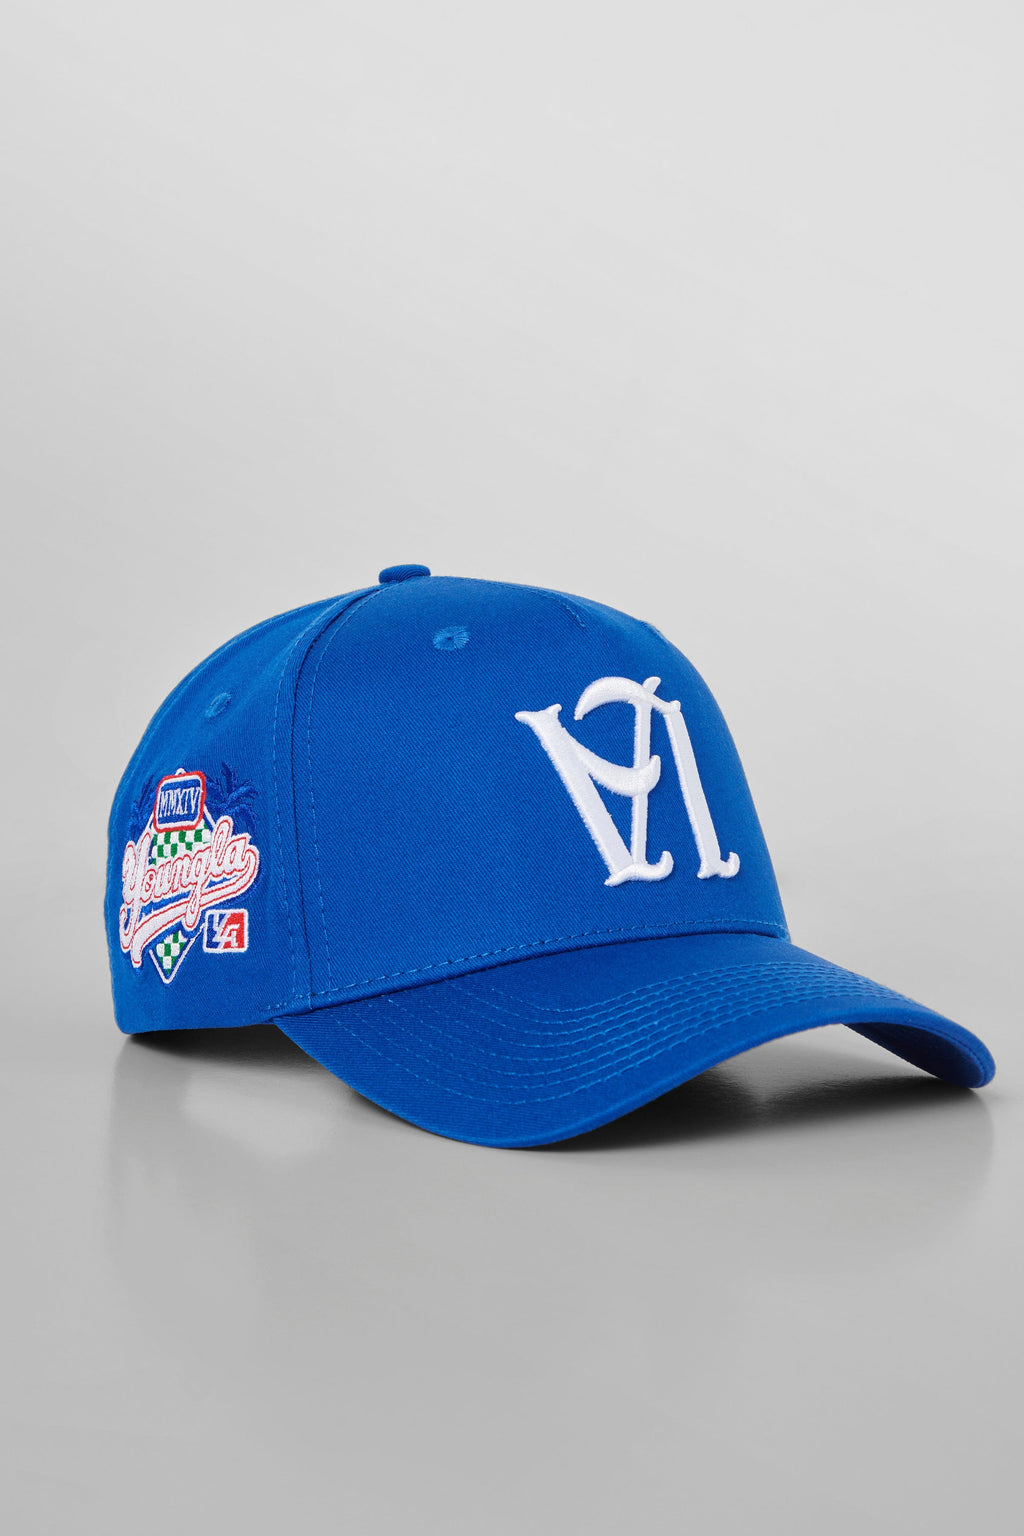 YoungLA LA Snapback Hats for Men Or Women - Baseball Adjustable Hat - LA  Embroidery Logo - Unisex Snap Back 919